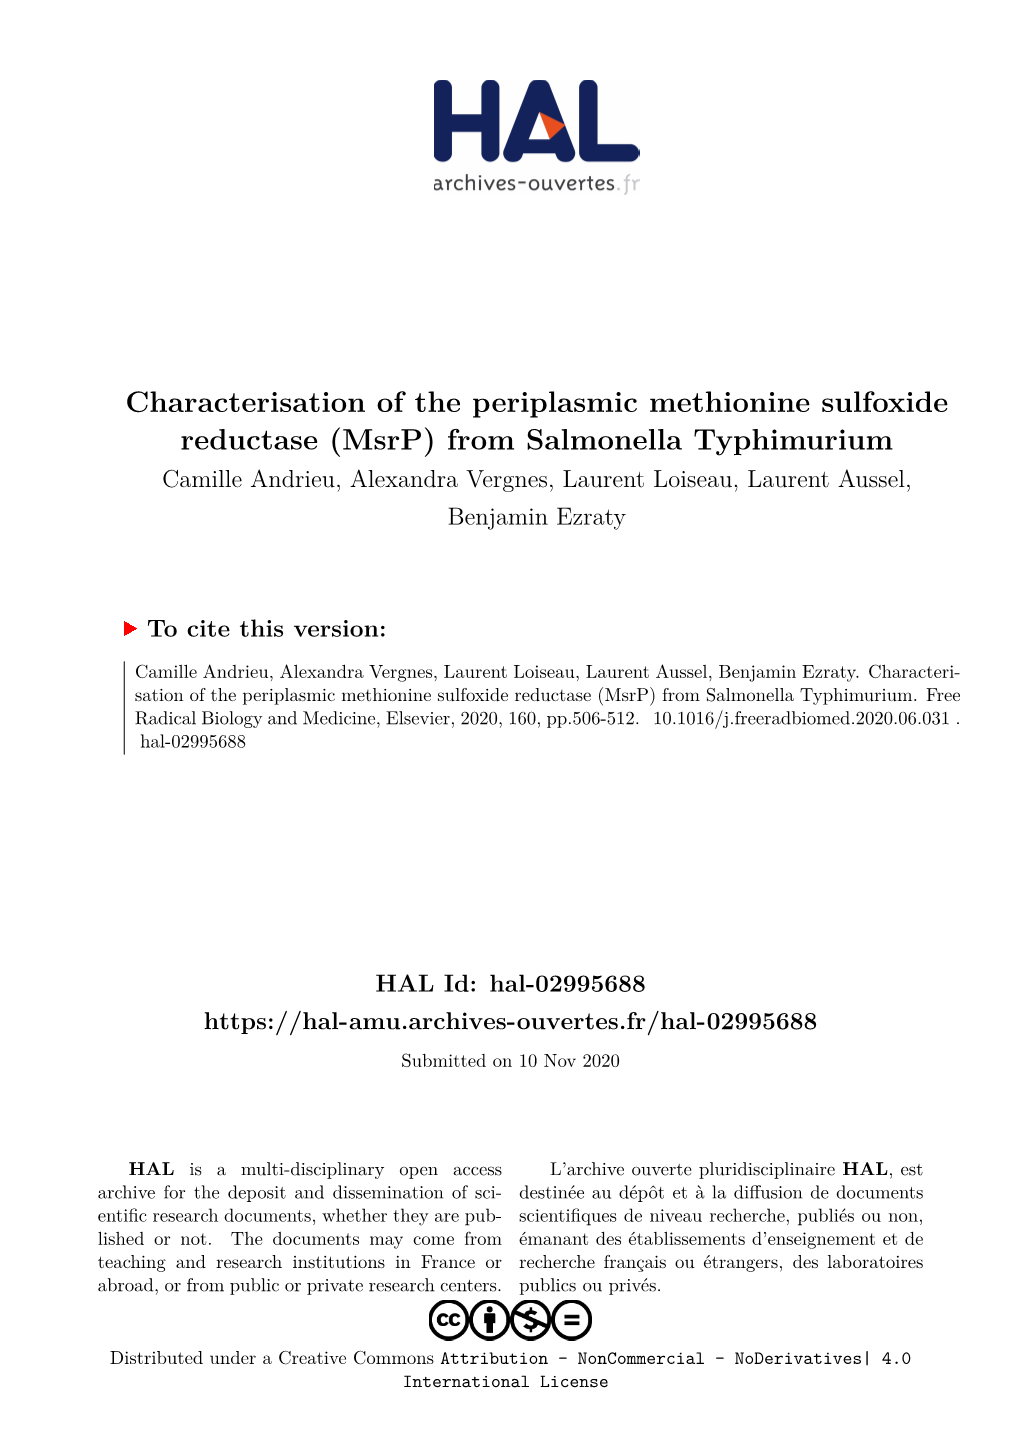 Characterisation of the Periplasmic Methionine Sulfoxide Reductase